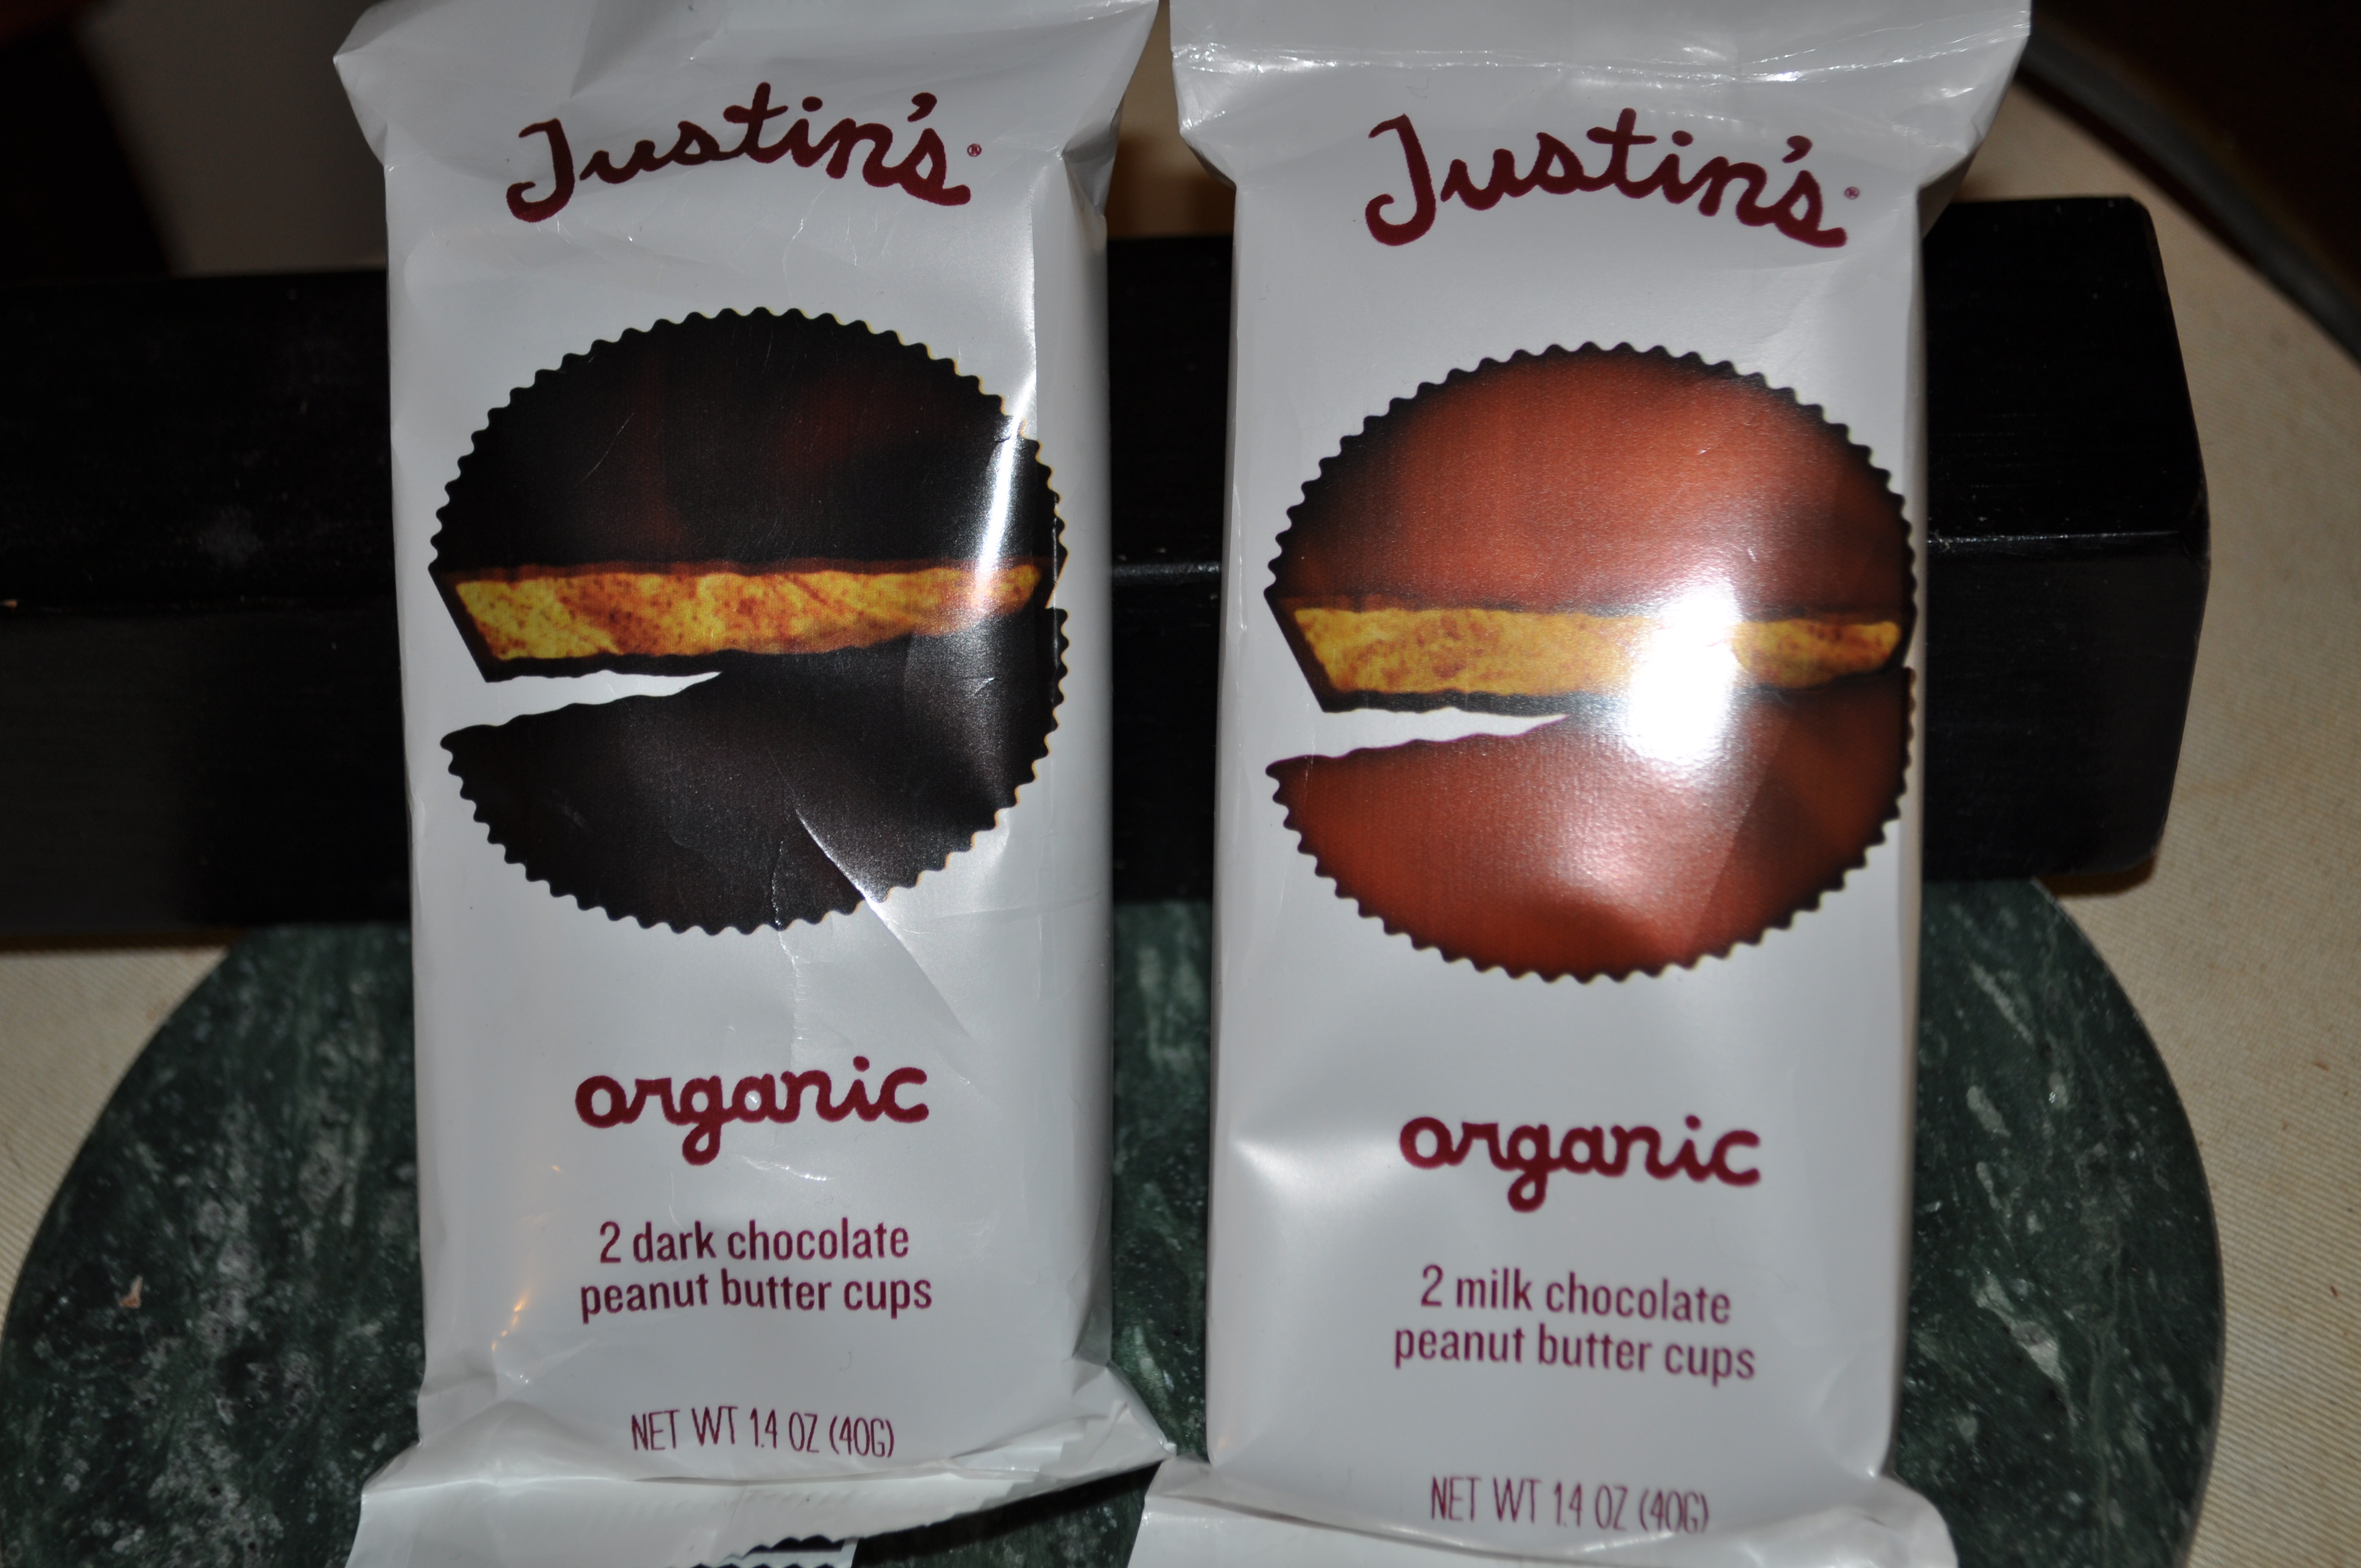 Justin's Organic Dark Chocolate Peanut Butter Cups, 12 Pack (2 Cups Each)